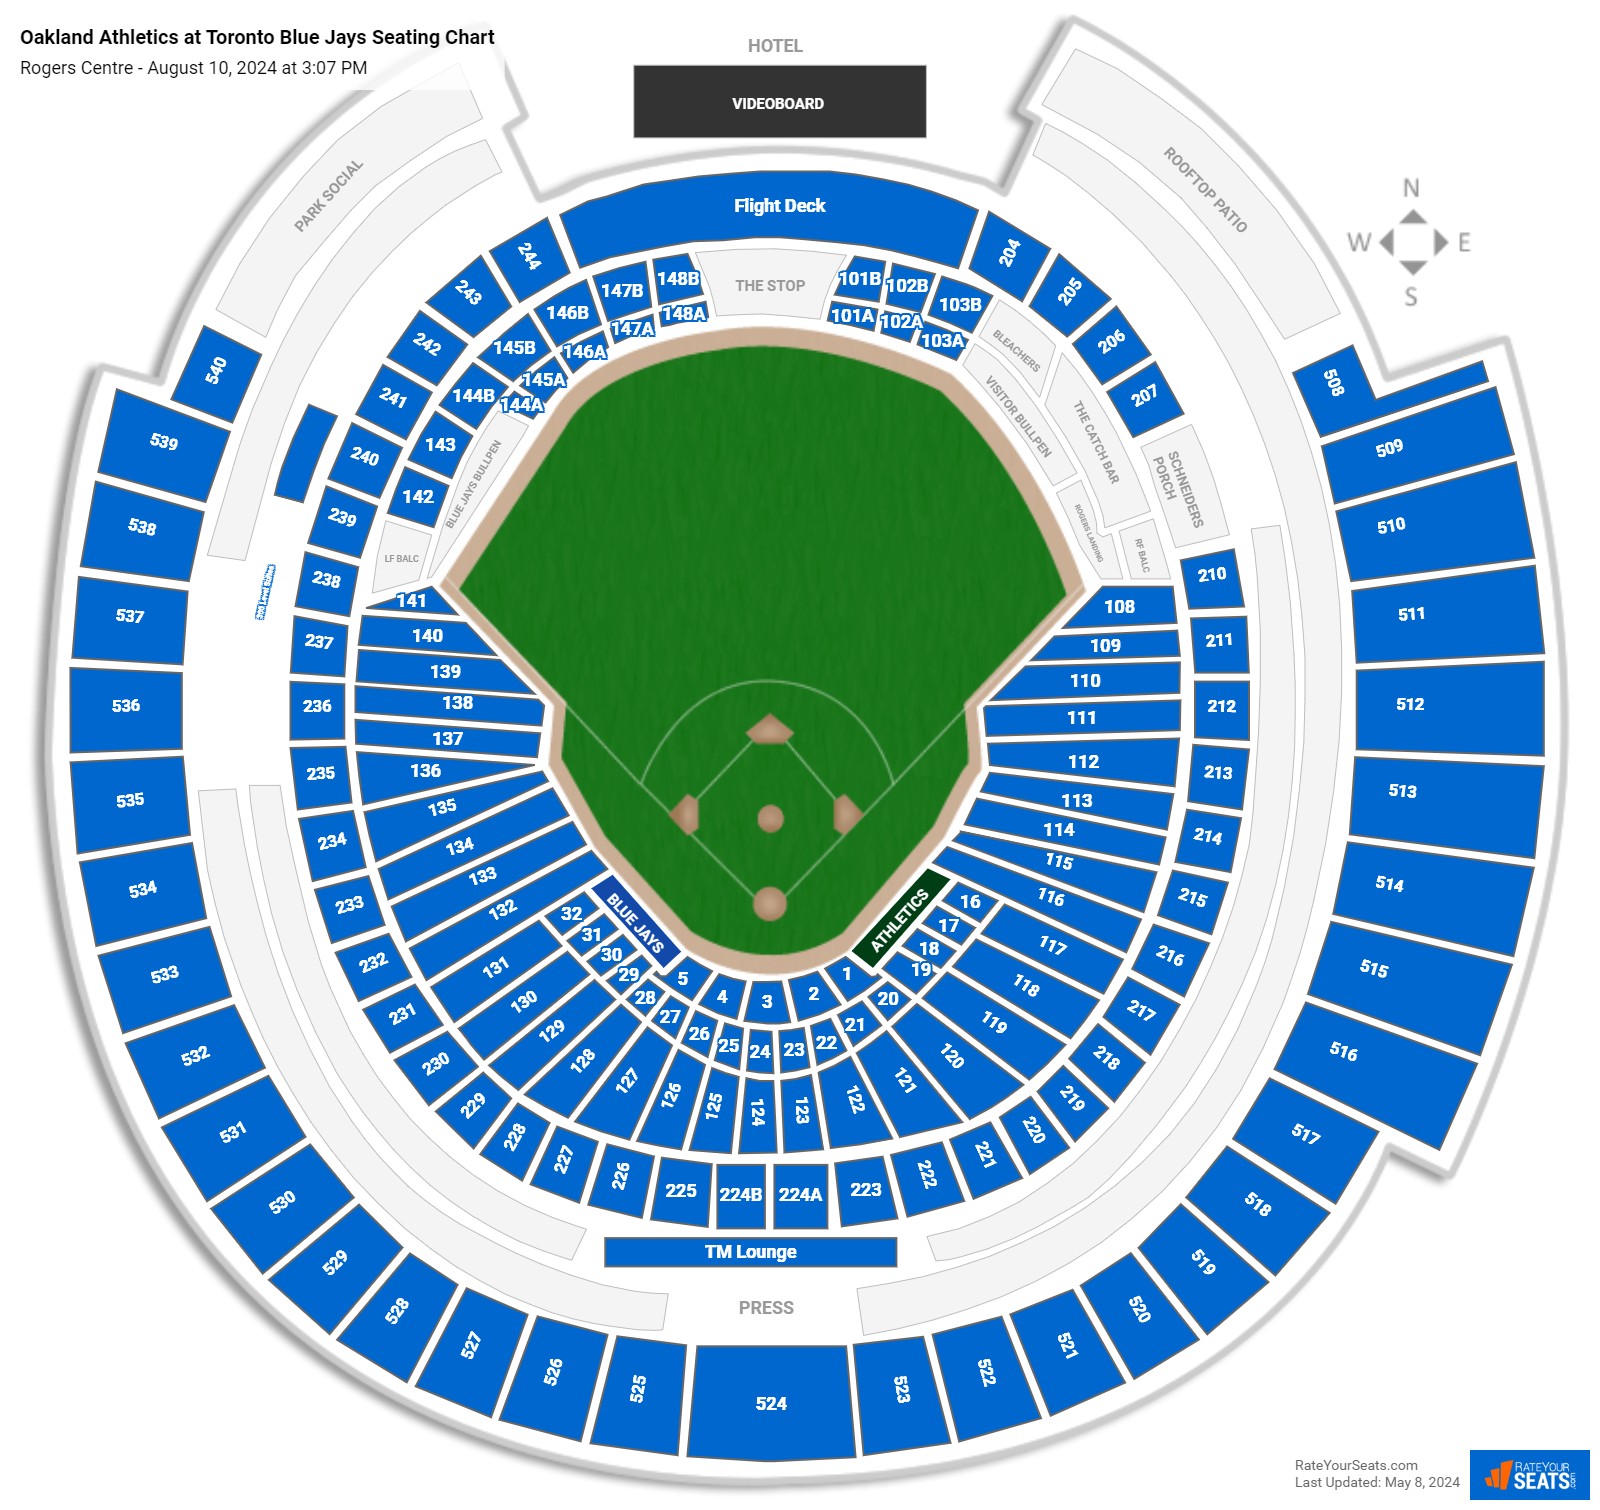 Oakland Athletics at Toronto Blue Jays seating chart Rogers Centre